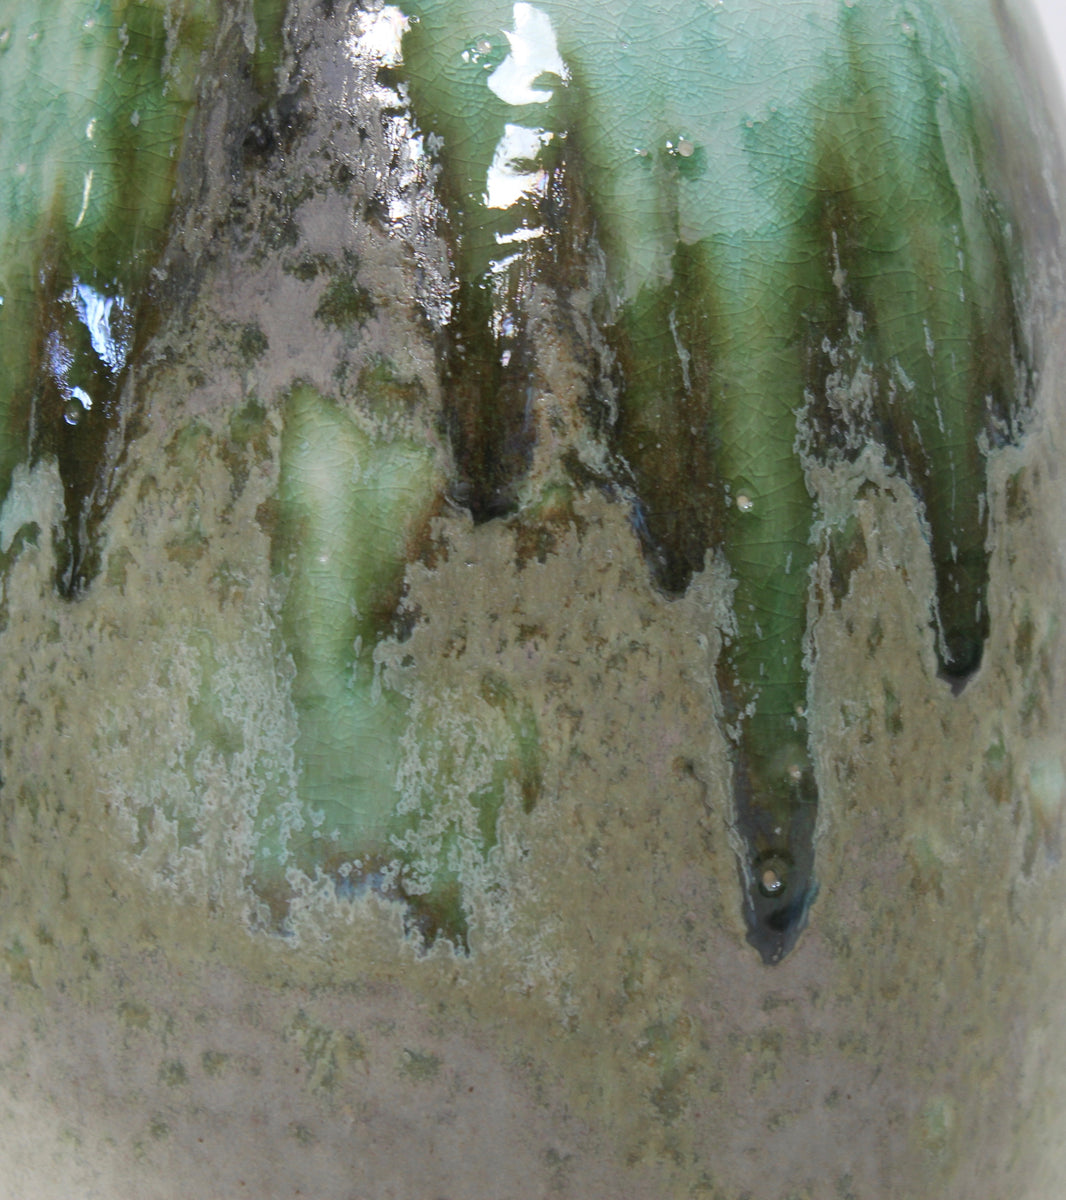 Tall Ovoid Vase <br> Green Glaze